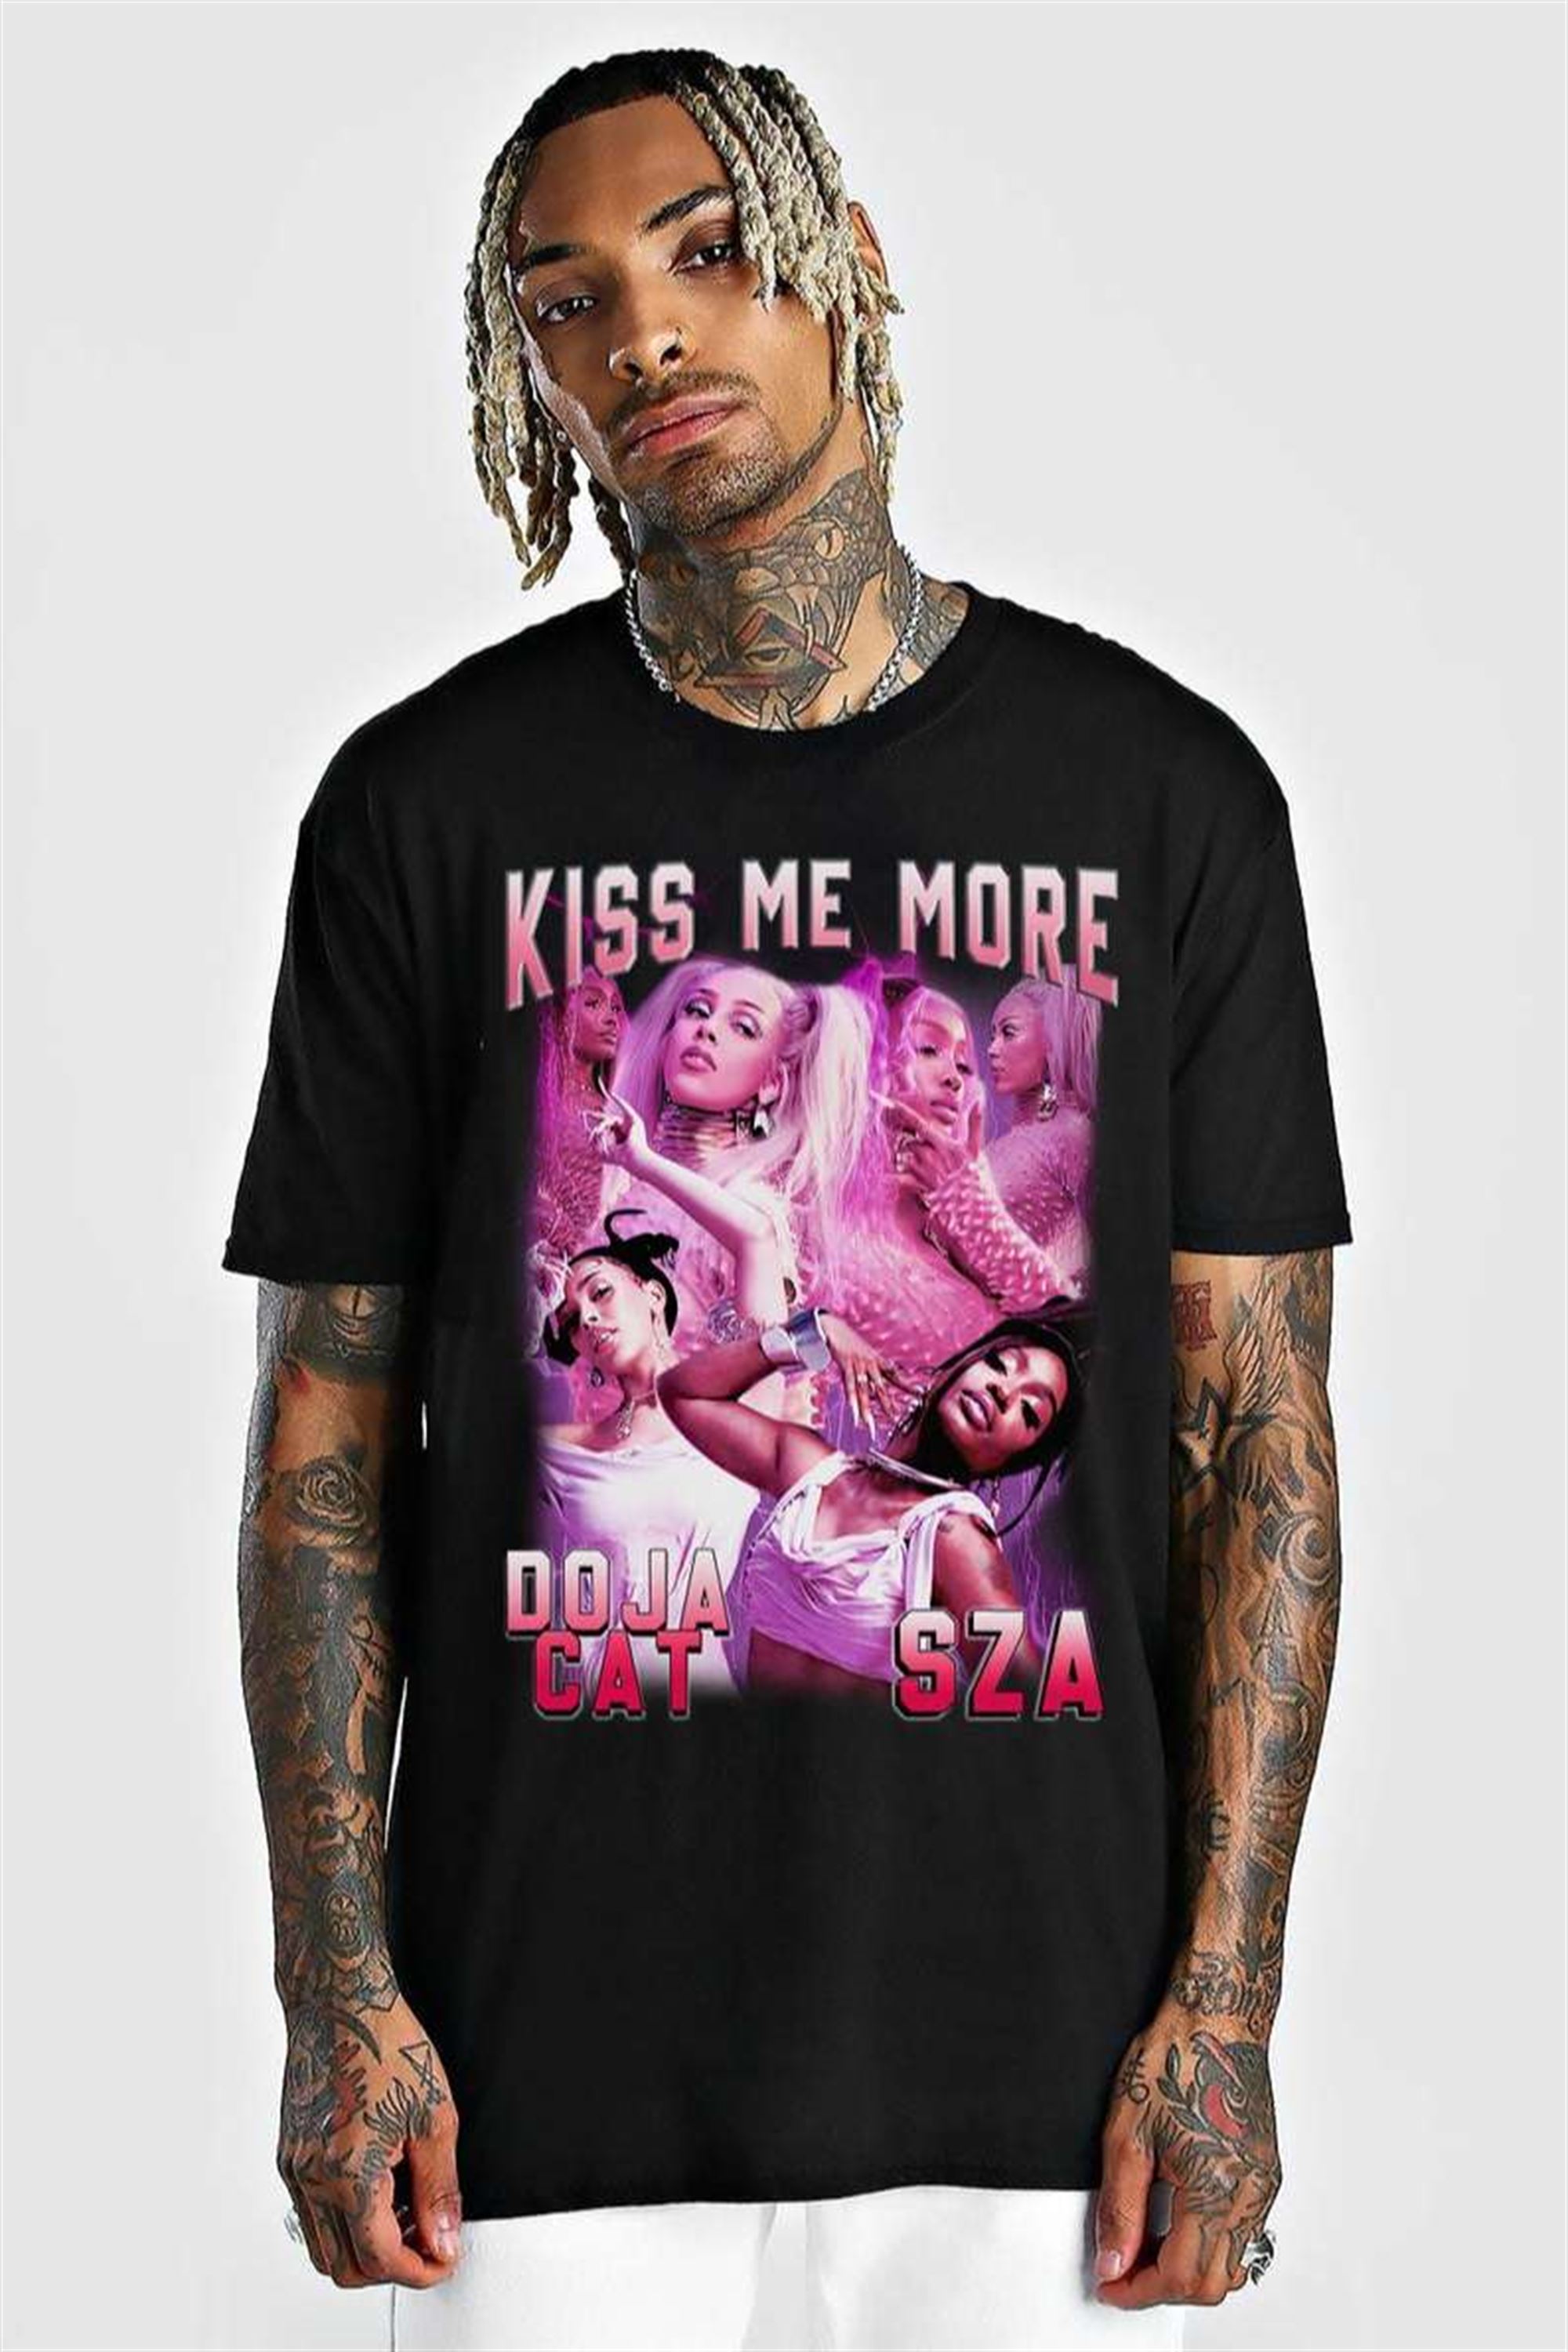 Doja Cat X Sza Kiss Me More Vintage Classic Unisex T Shirt Size Up To 5xl